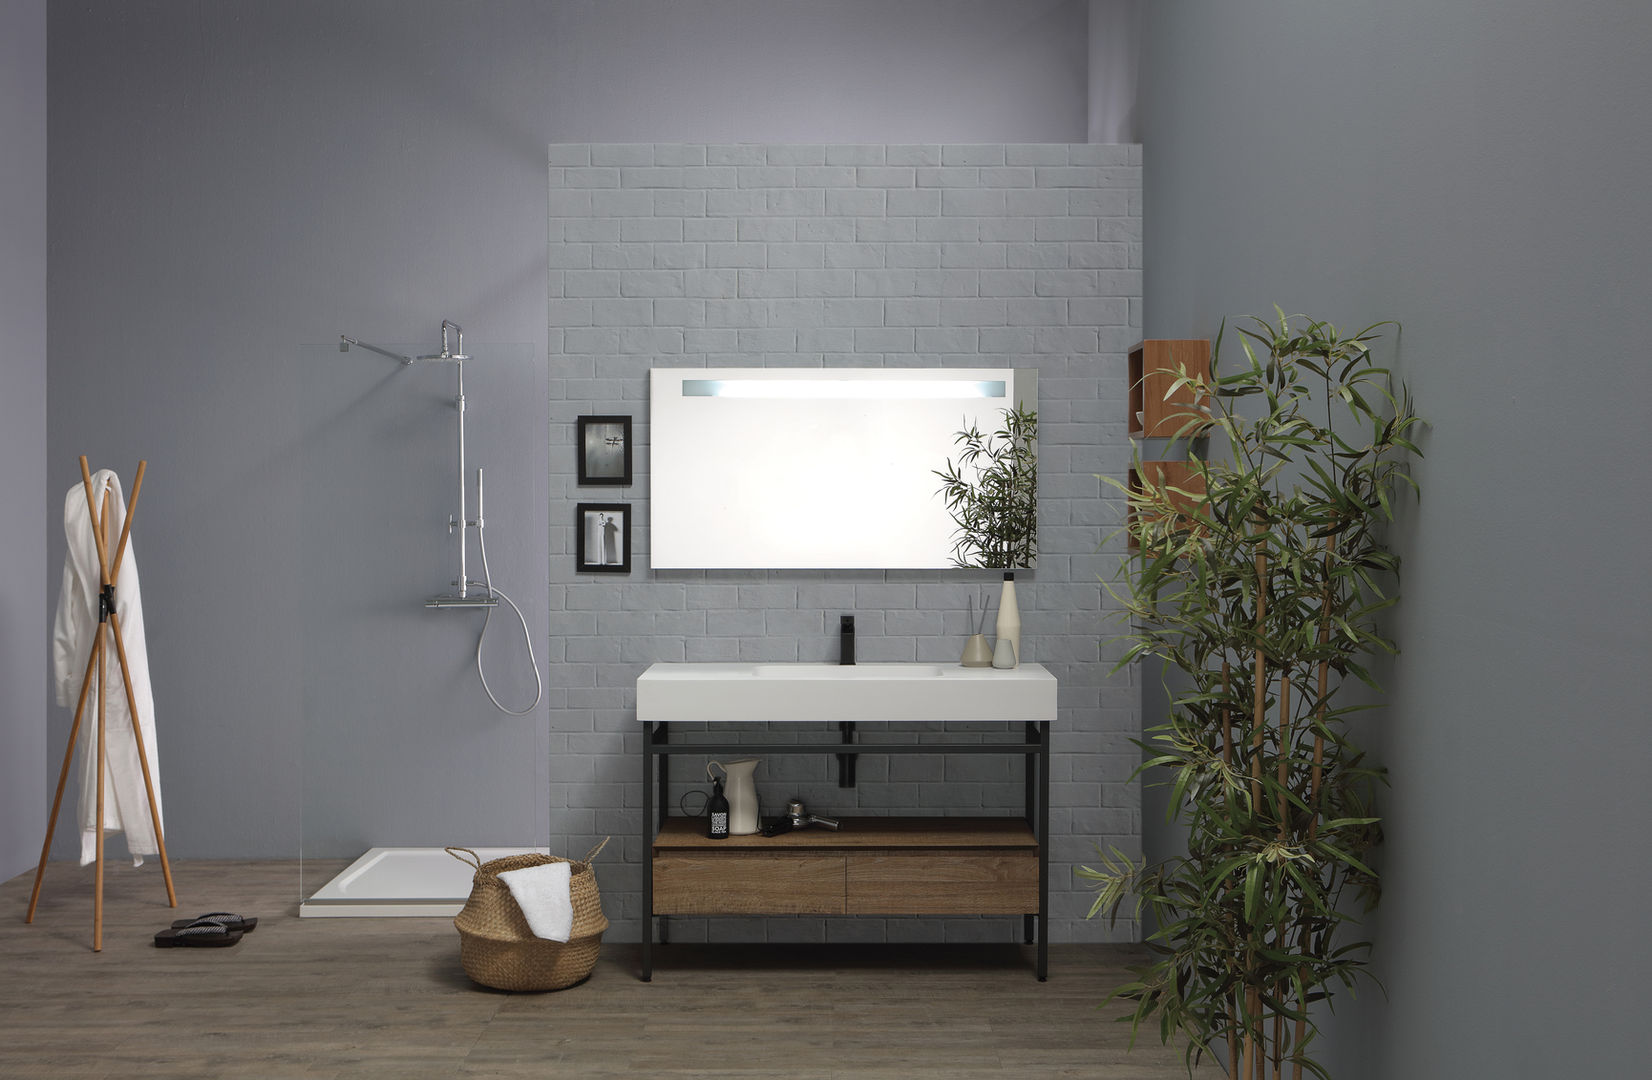 S-line collection, Mastro Fiore Mastro Fiore Industrial style bathroom Sinks